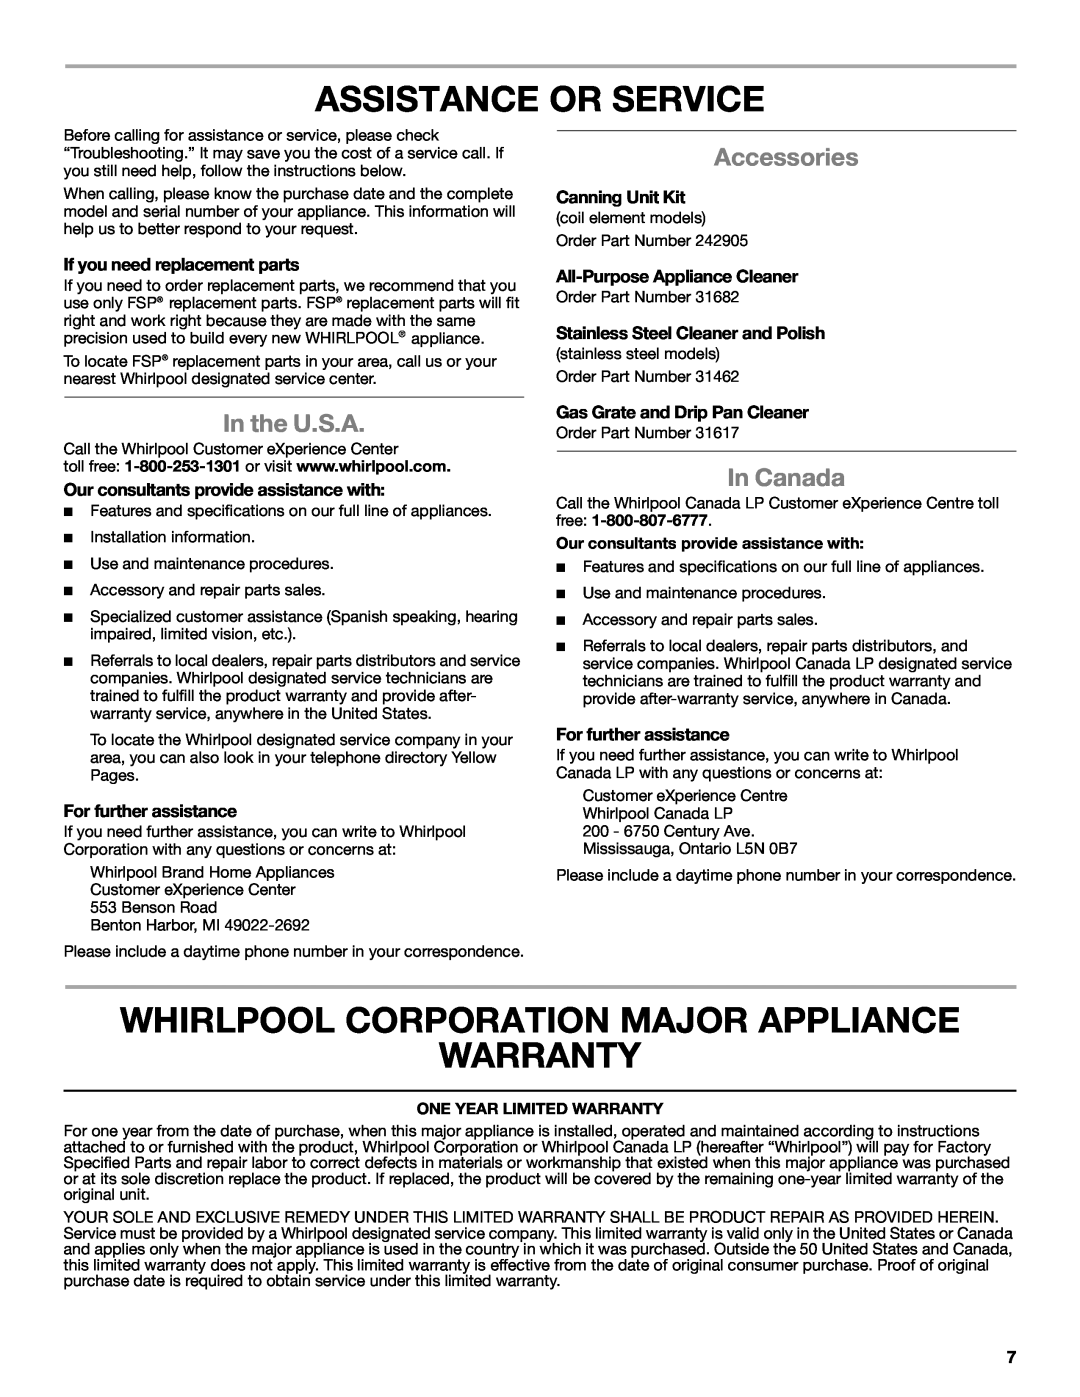 Whirlpool W10458809B Assistance Or Service, Whirlpool Corporation Major Appliance Warranty, Accessories, In the U.S.A 